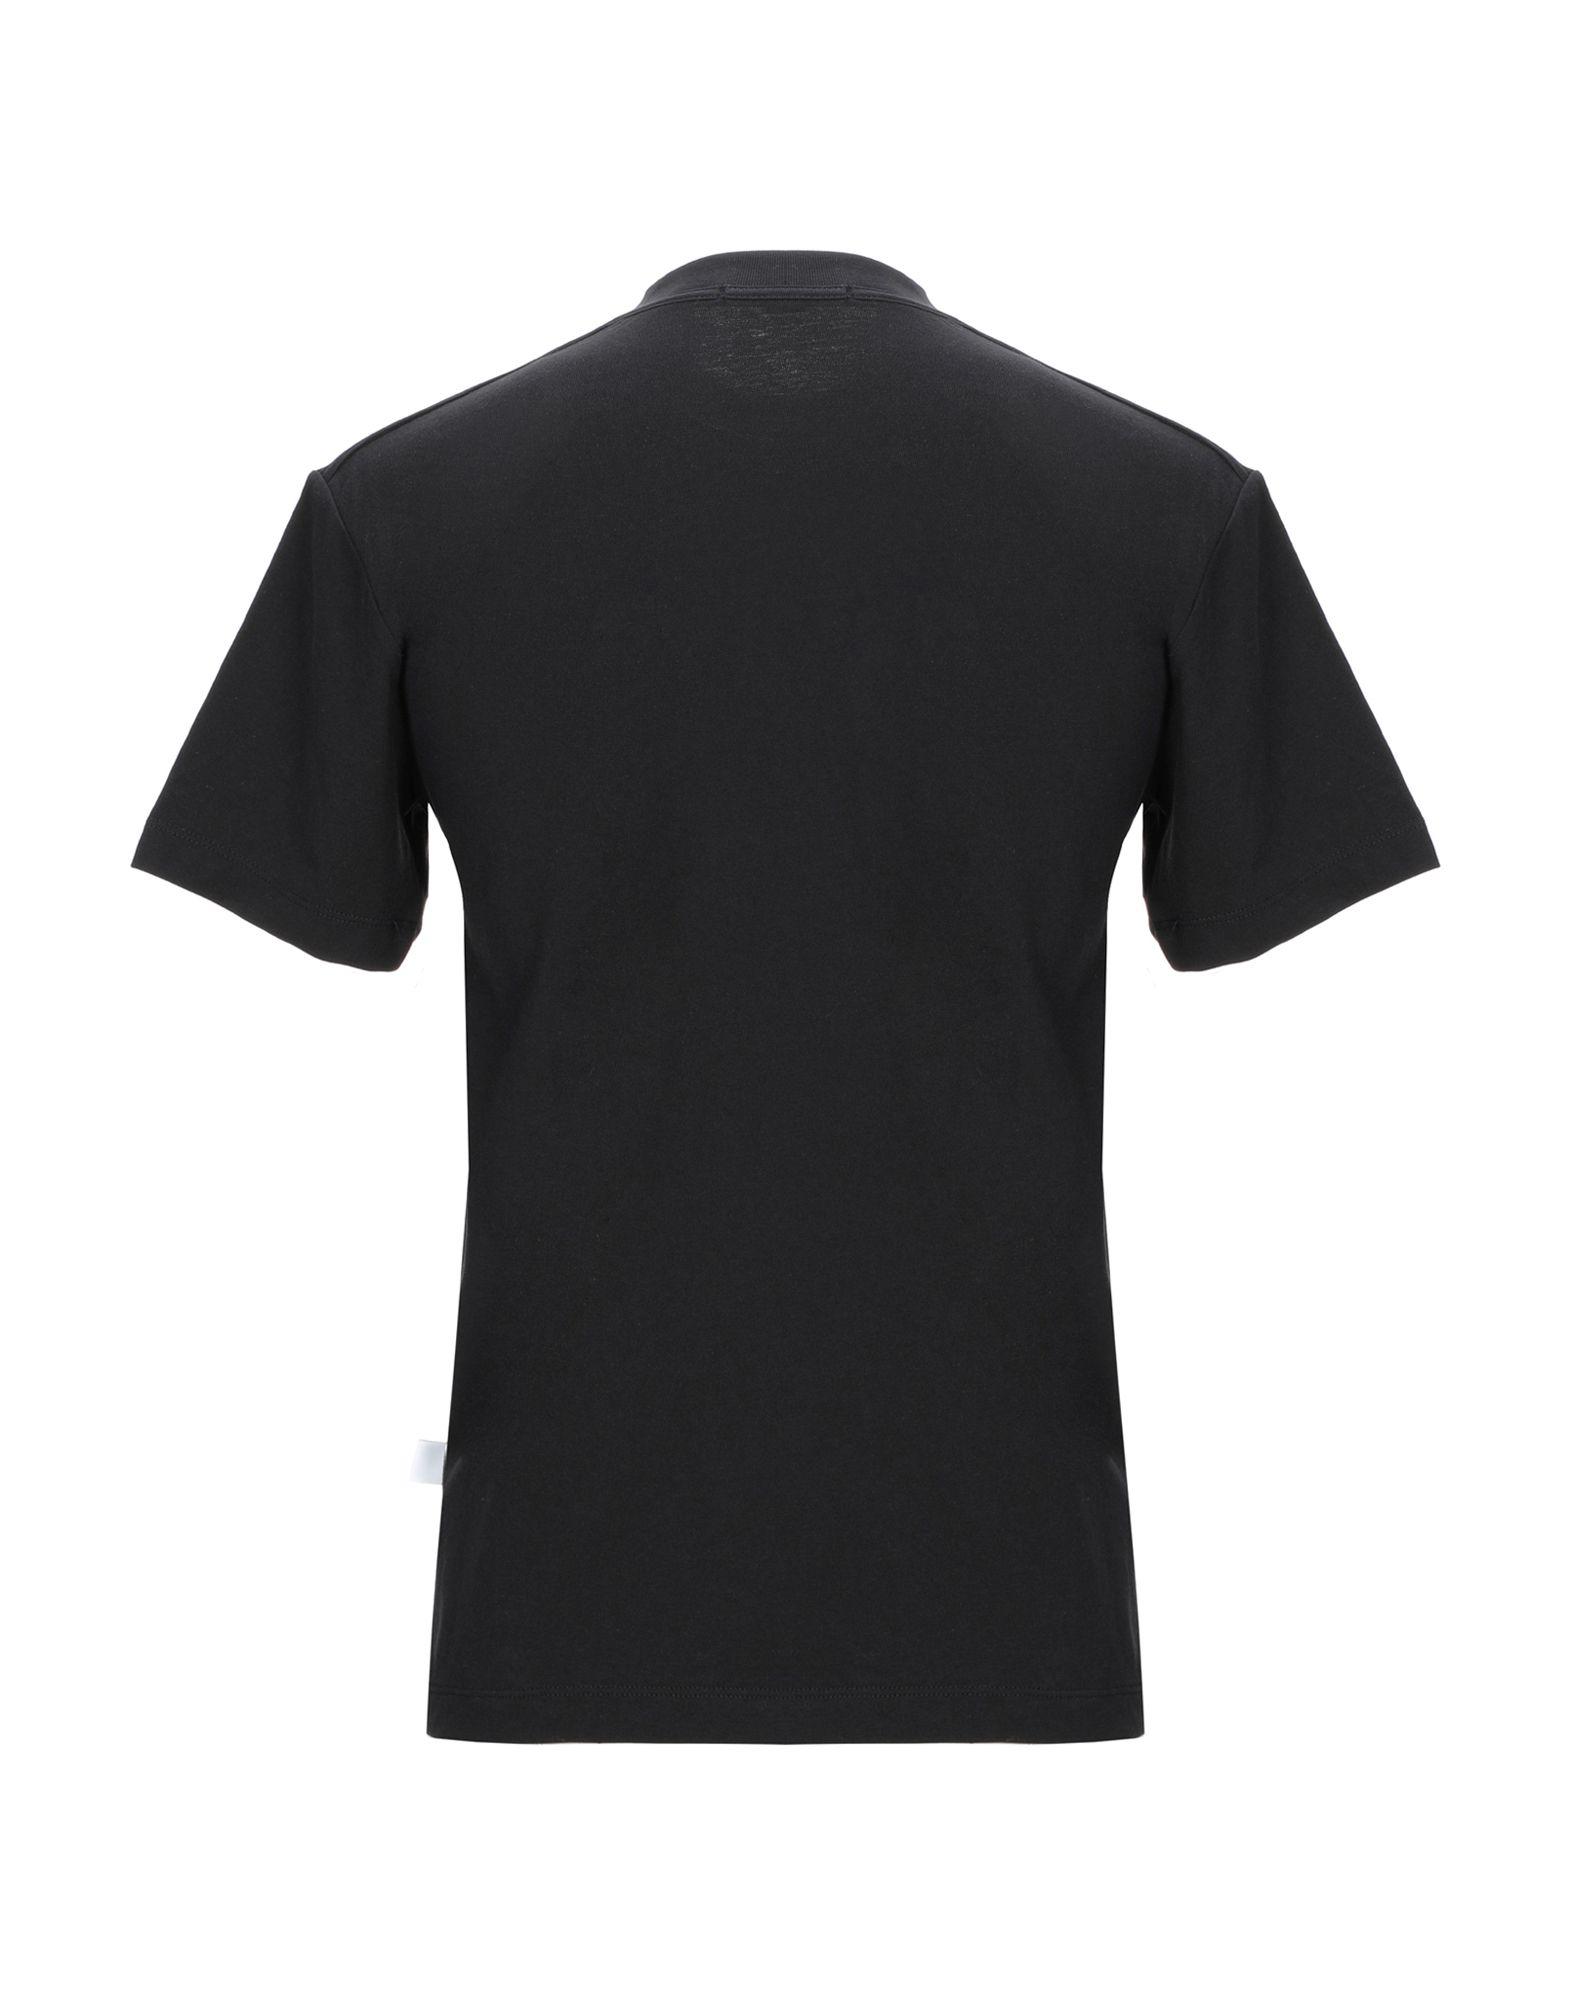 Alexander Wang T-shirt in Black for Men - Lyst